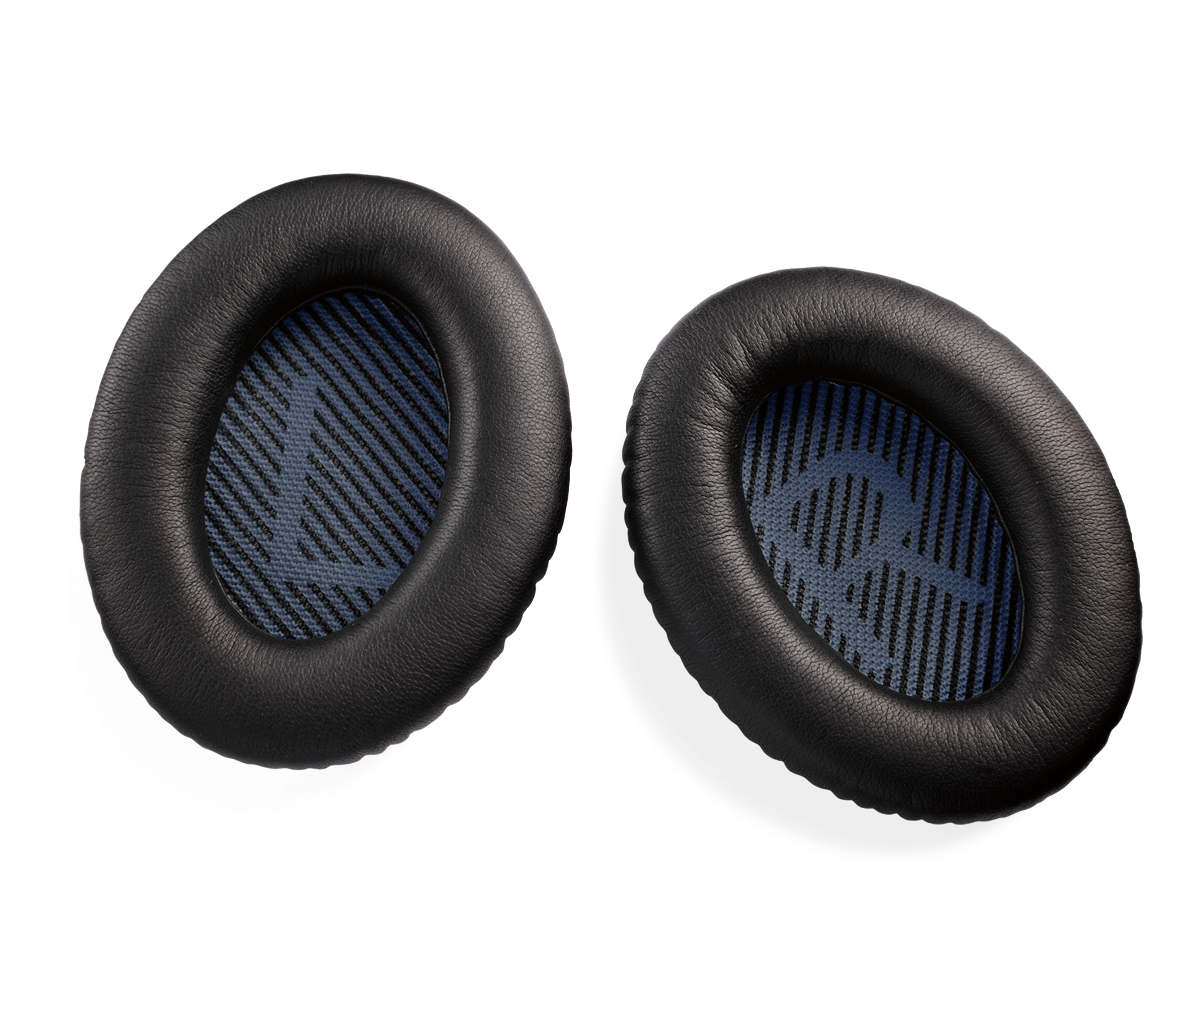 Bose SoundLink® Around-ear Wireless Headphones II Ear Cushion Kit Black